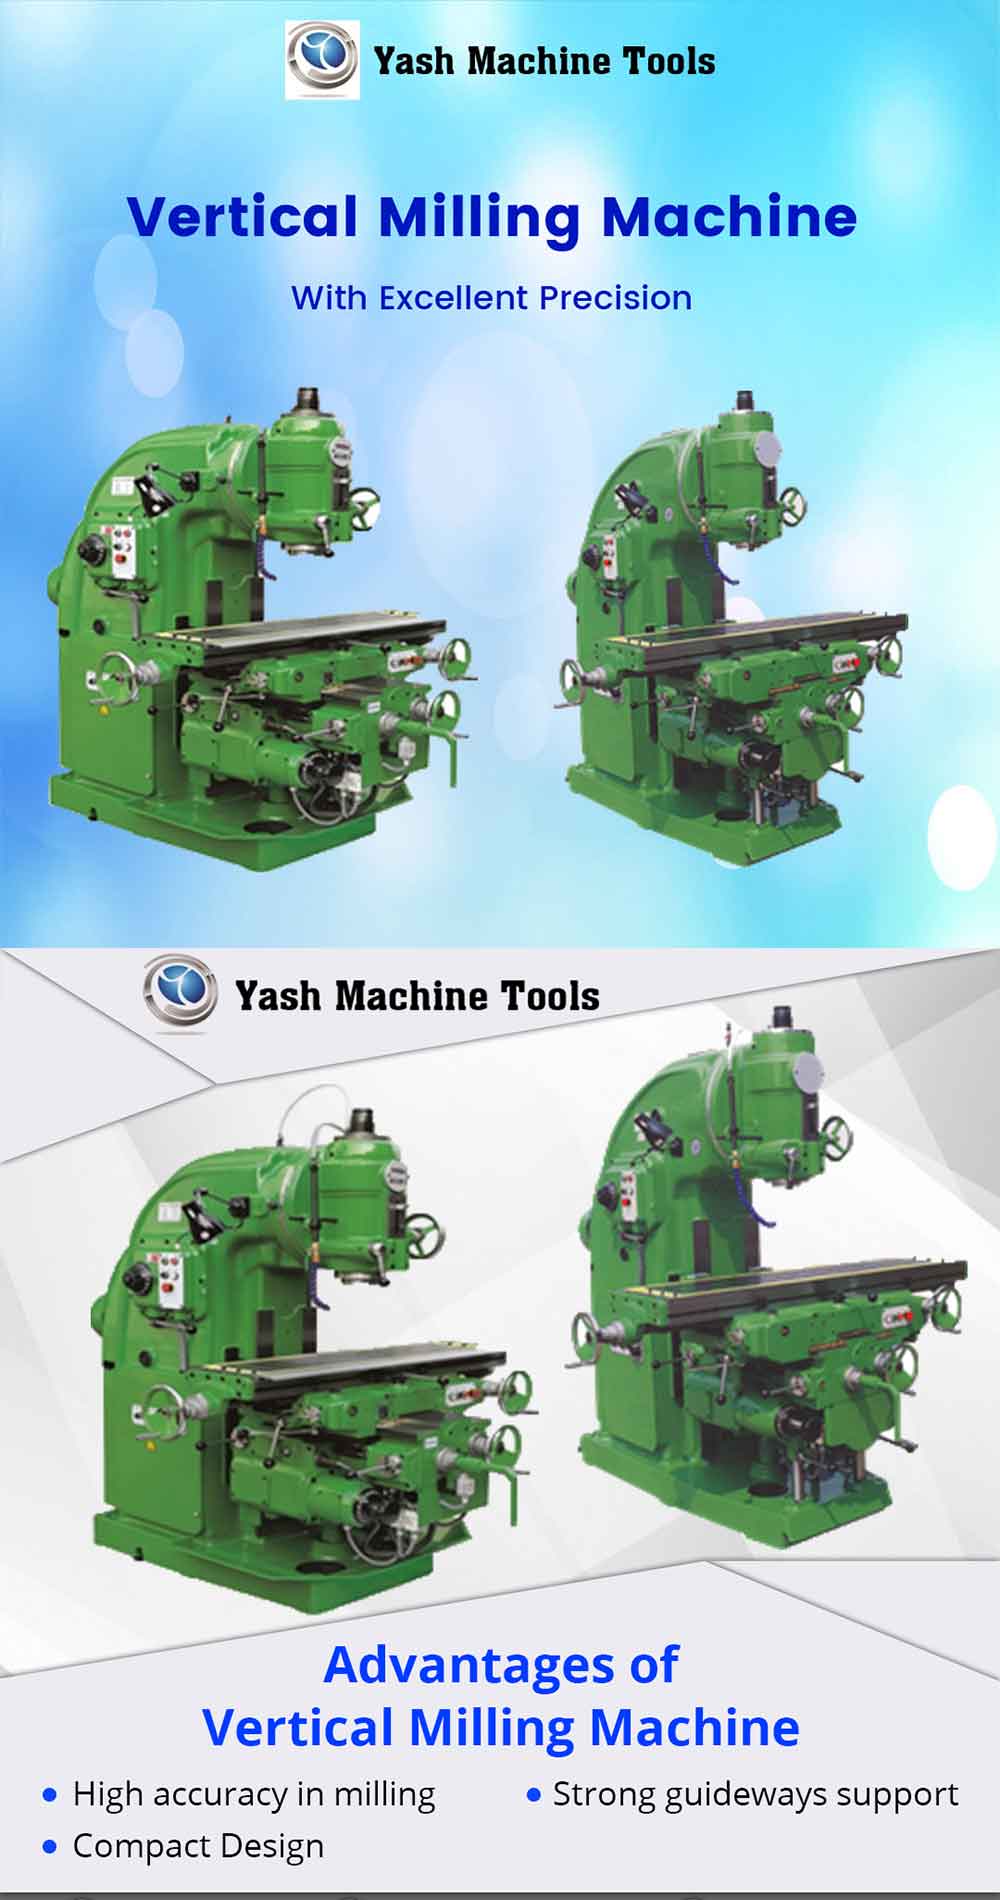 Advantages of vertical milling machine